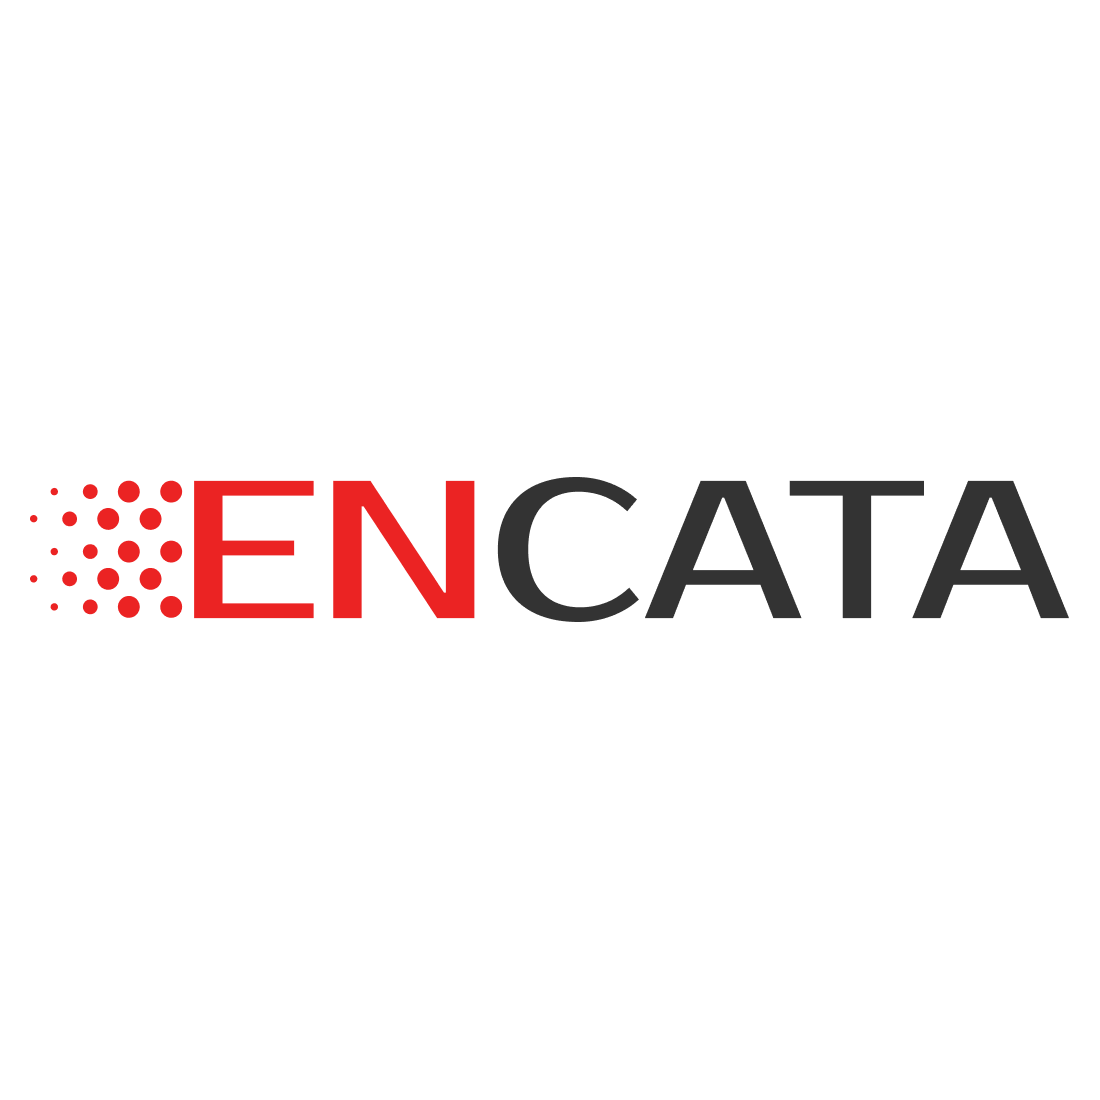 EnCata profile on Qualified.One